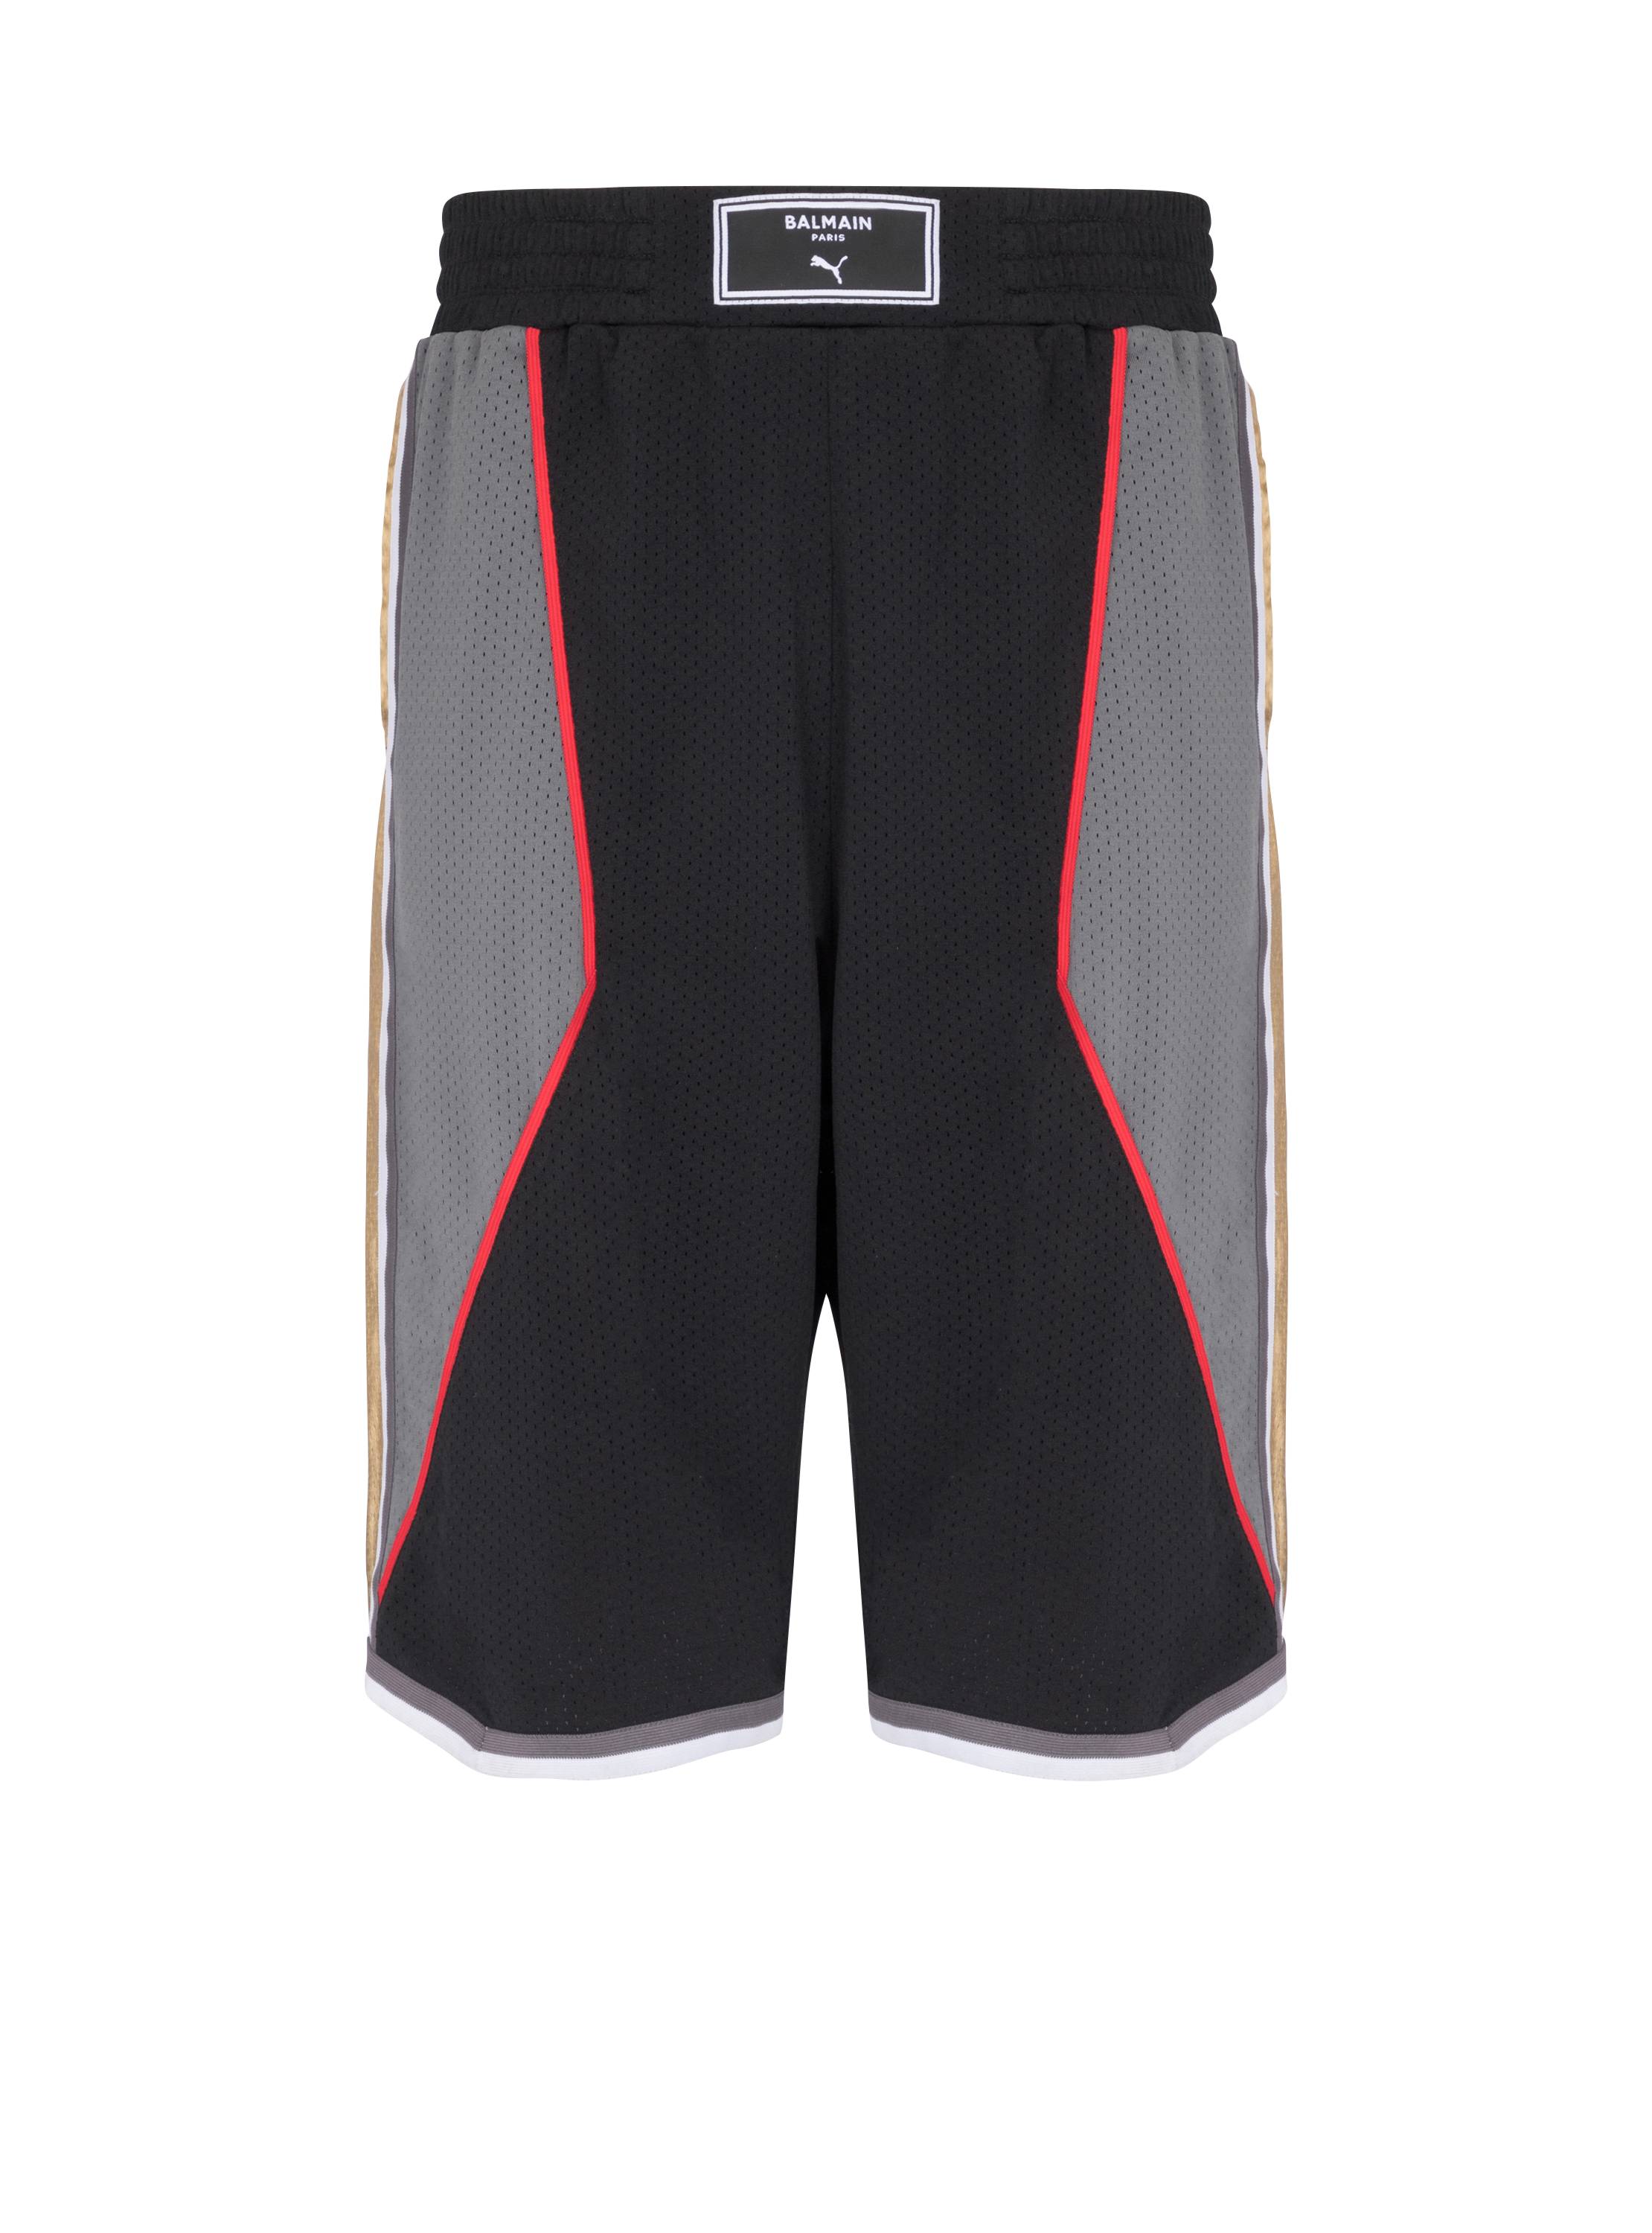 Balmain x Puma - Shorts de baloncesto